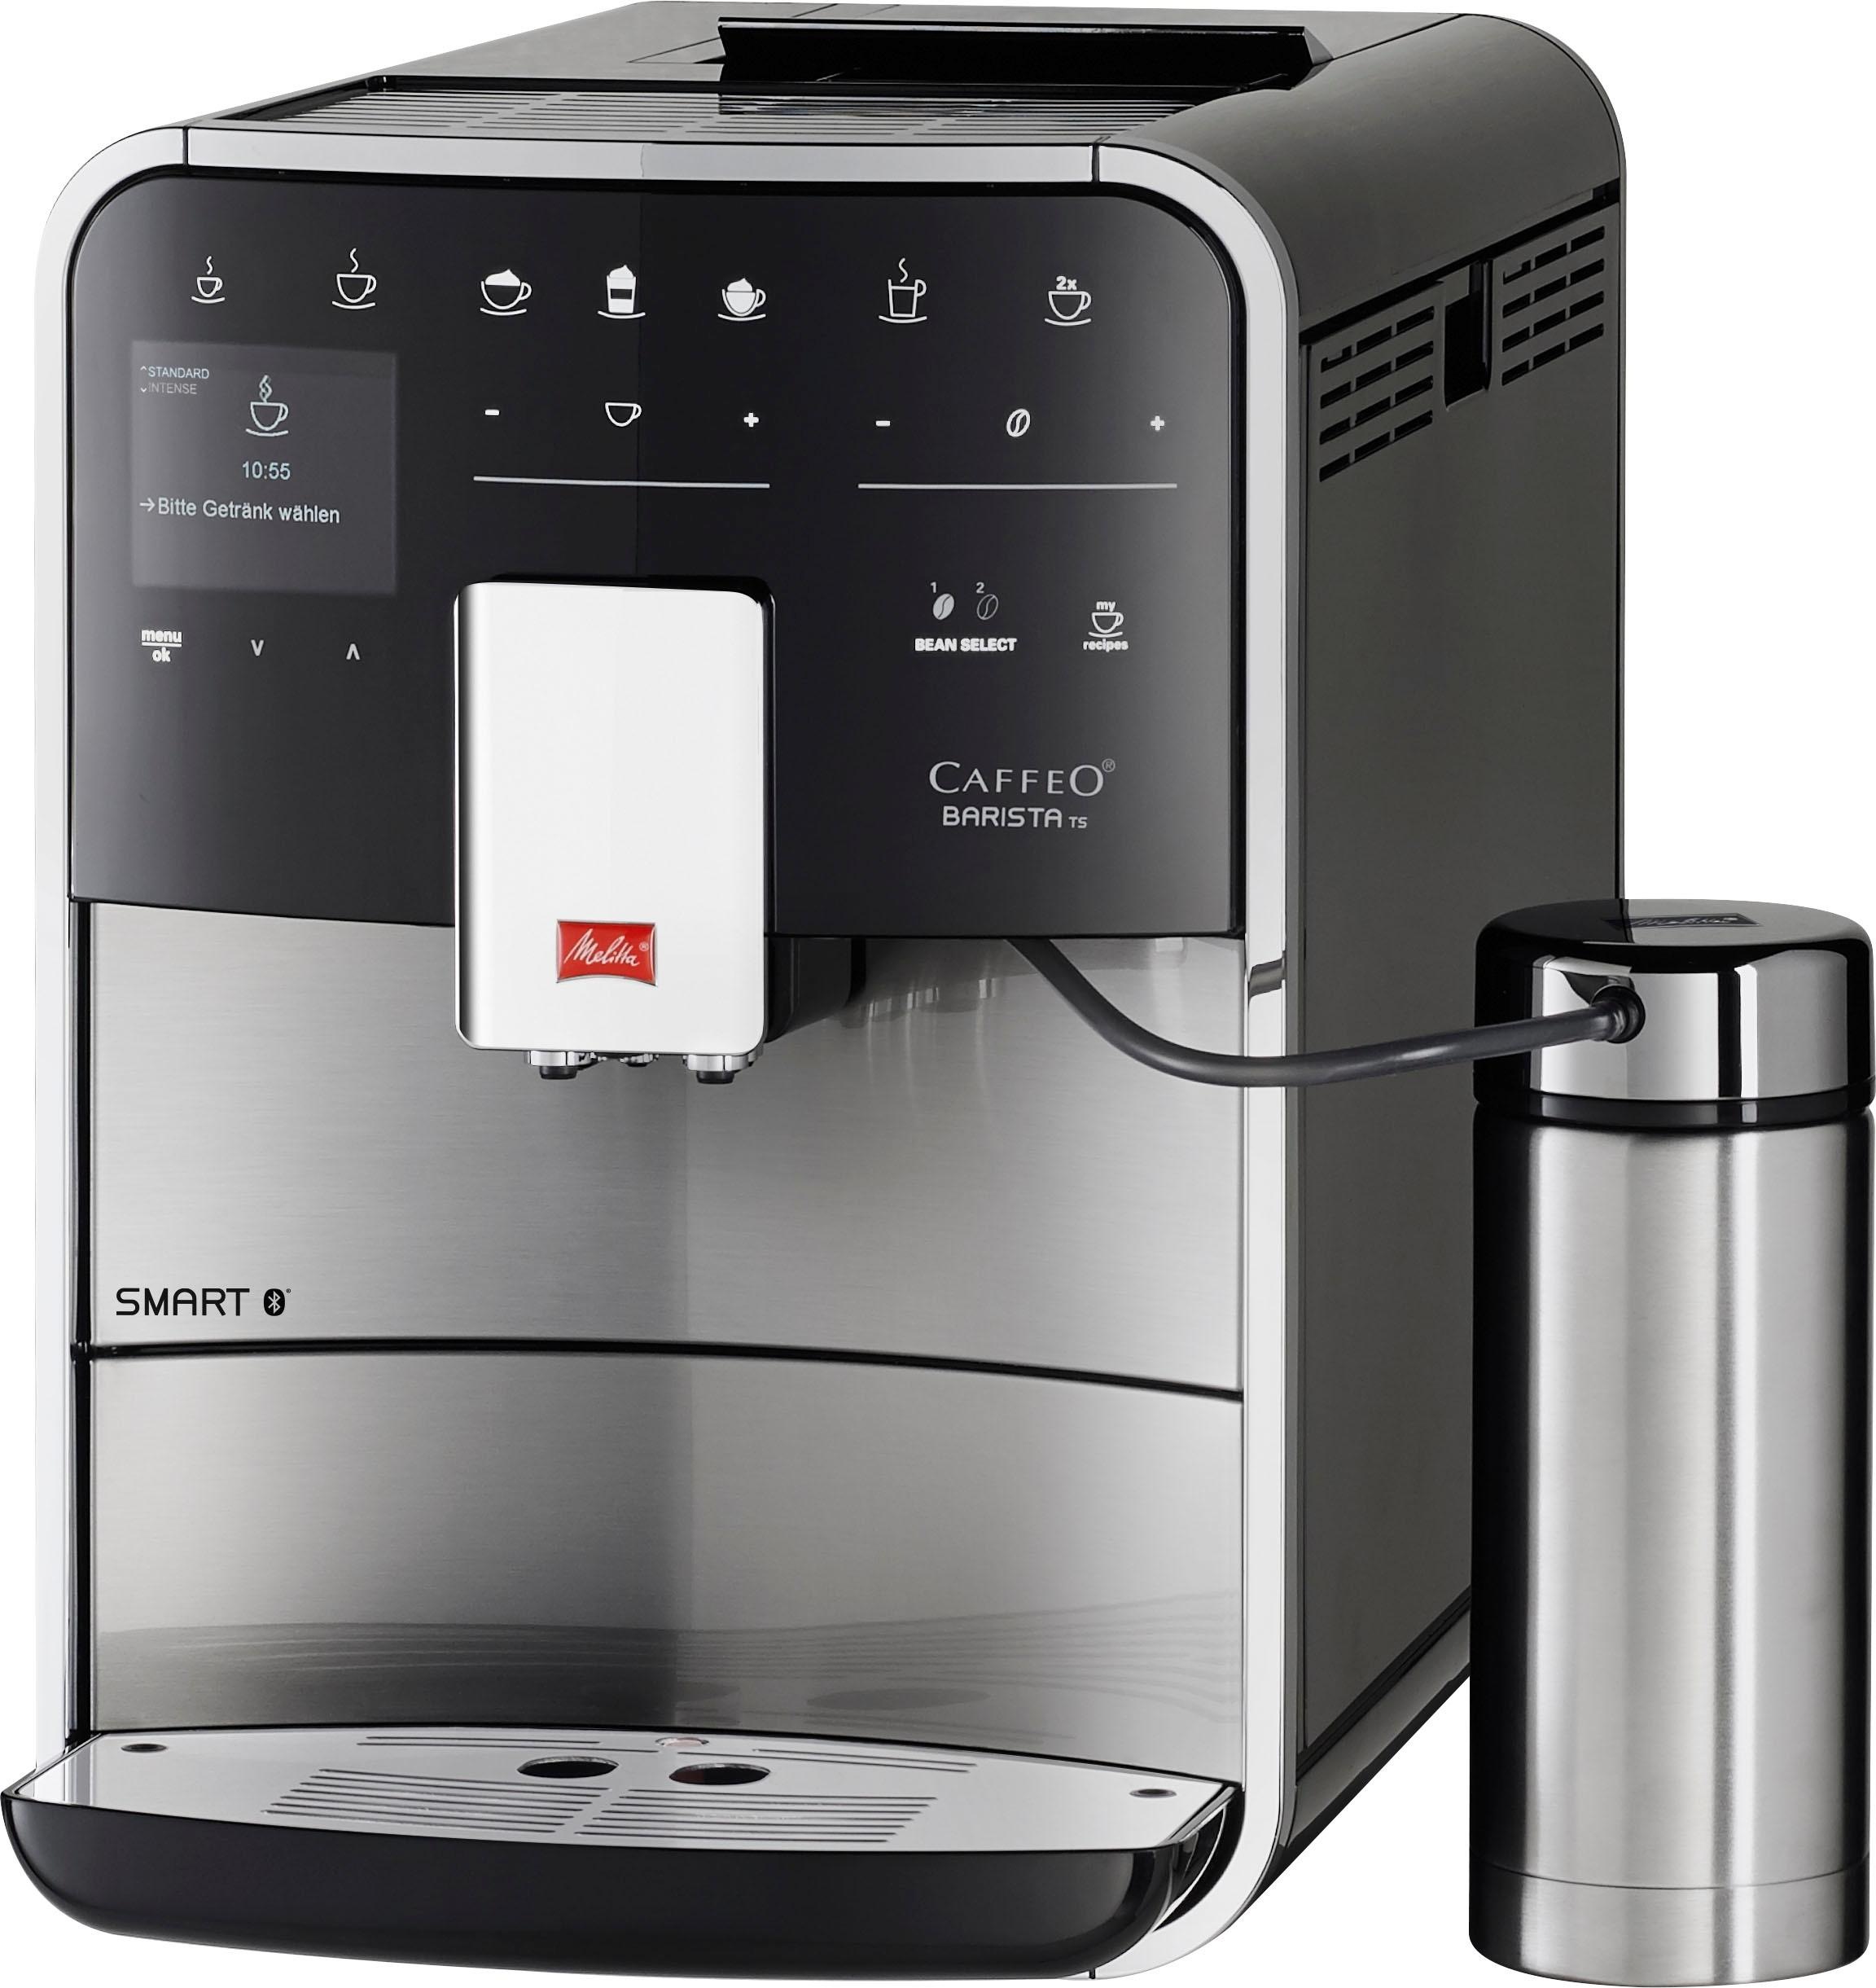 Melitta Kaffeevollautomat »Barista TS Smart® F 86/0-100, Edelstahl«, Hochwertige Front aus Edelstahl, 21 Kaffeerezepte & 8 Benutzerprofile